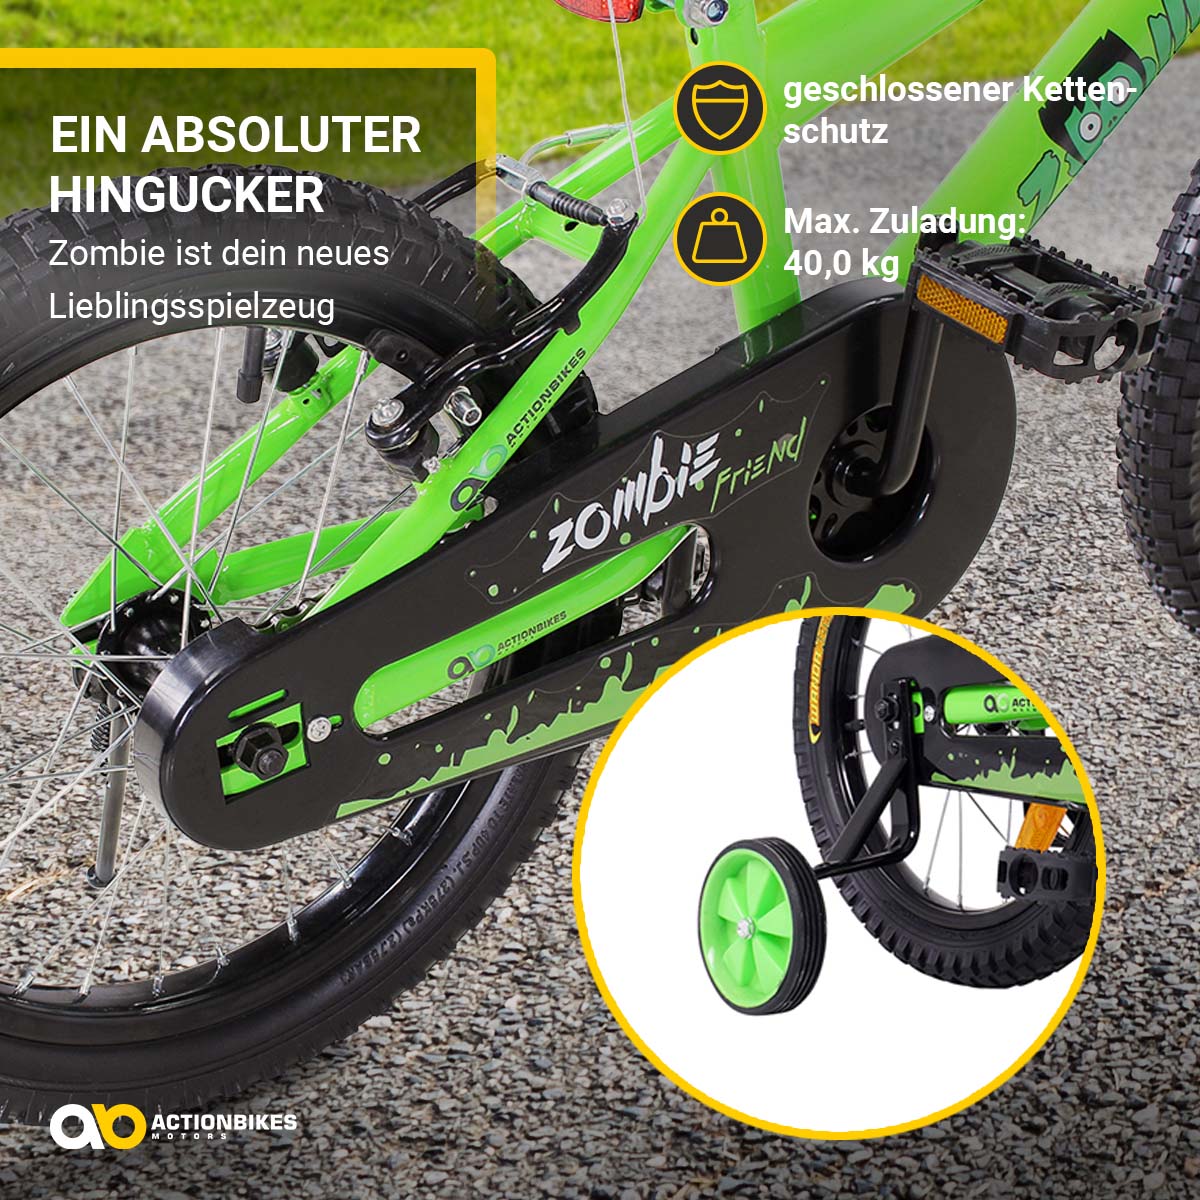 https://www.miweba.de/media/image/a1/35/c6/03-kinderfahrrad-16-zoll-gruen-actionbikes-motors-zombie-hingucker.jpg